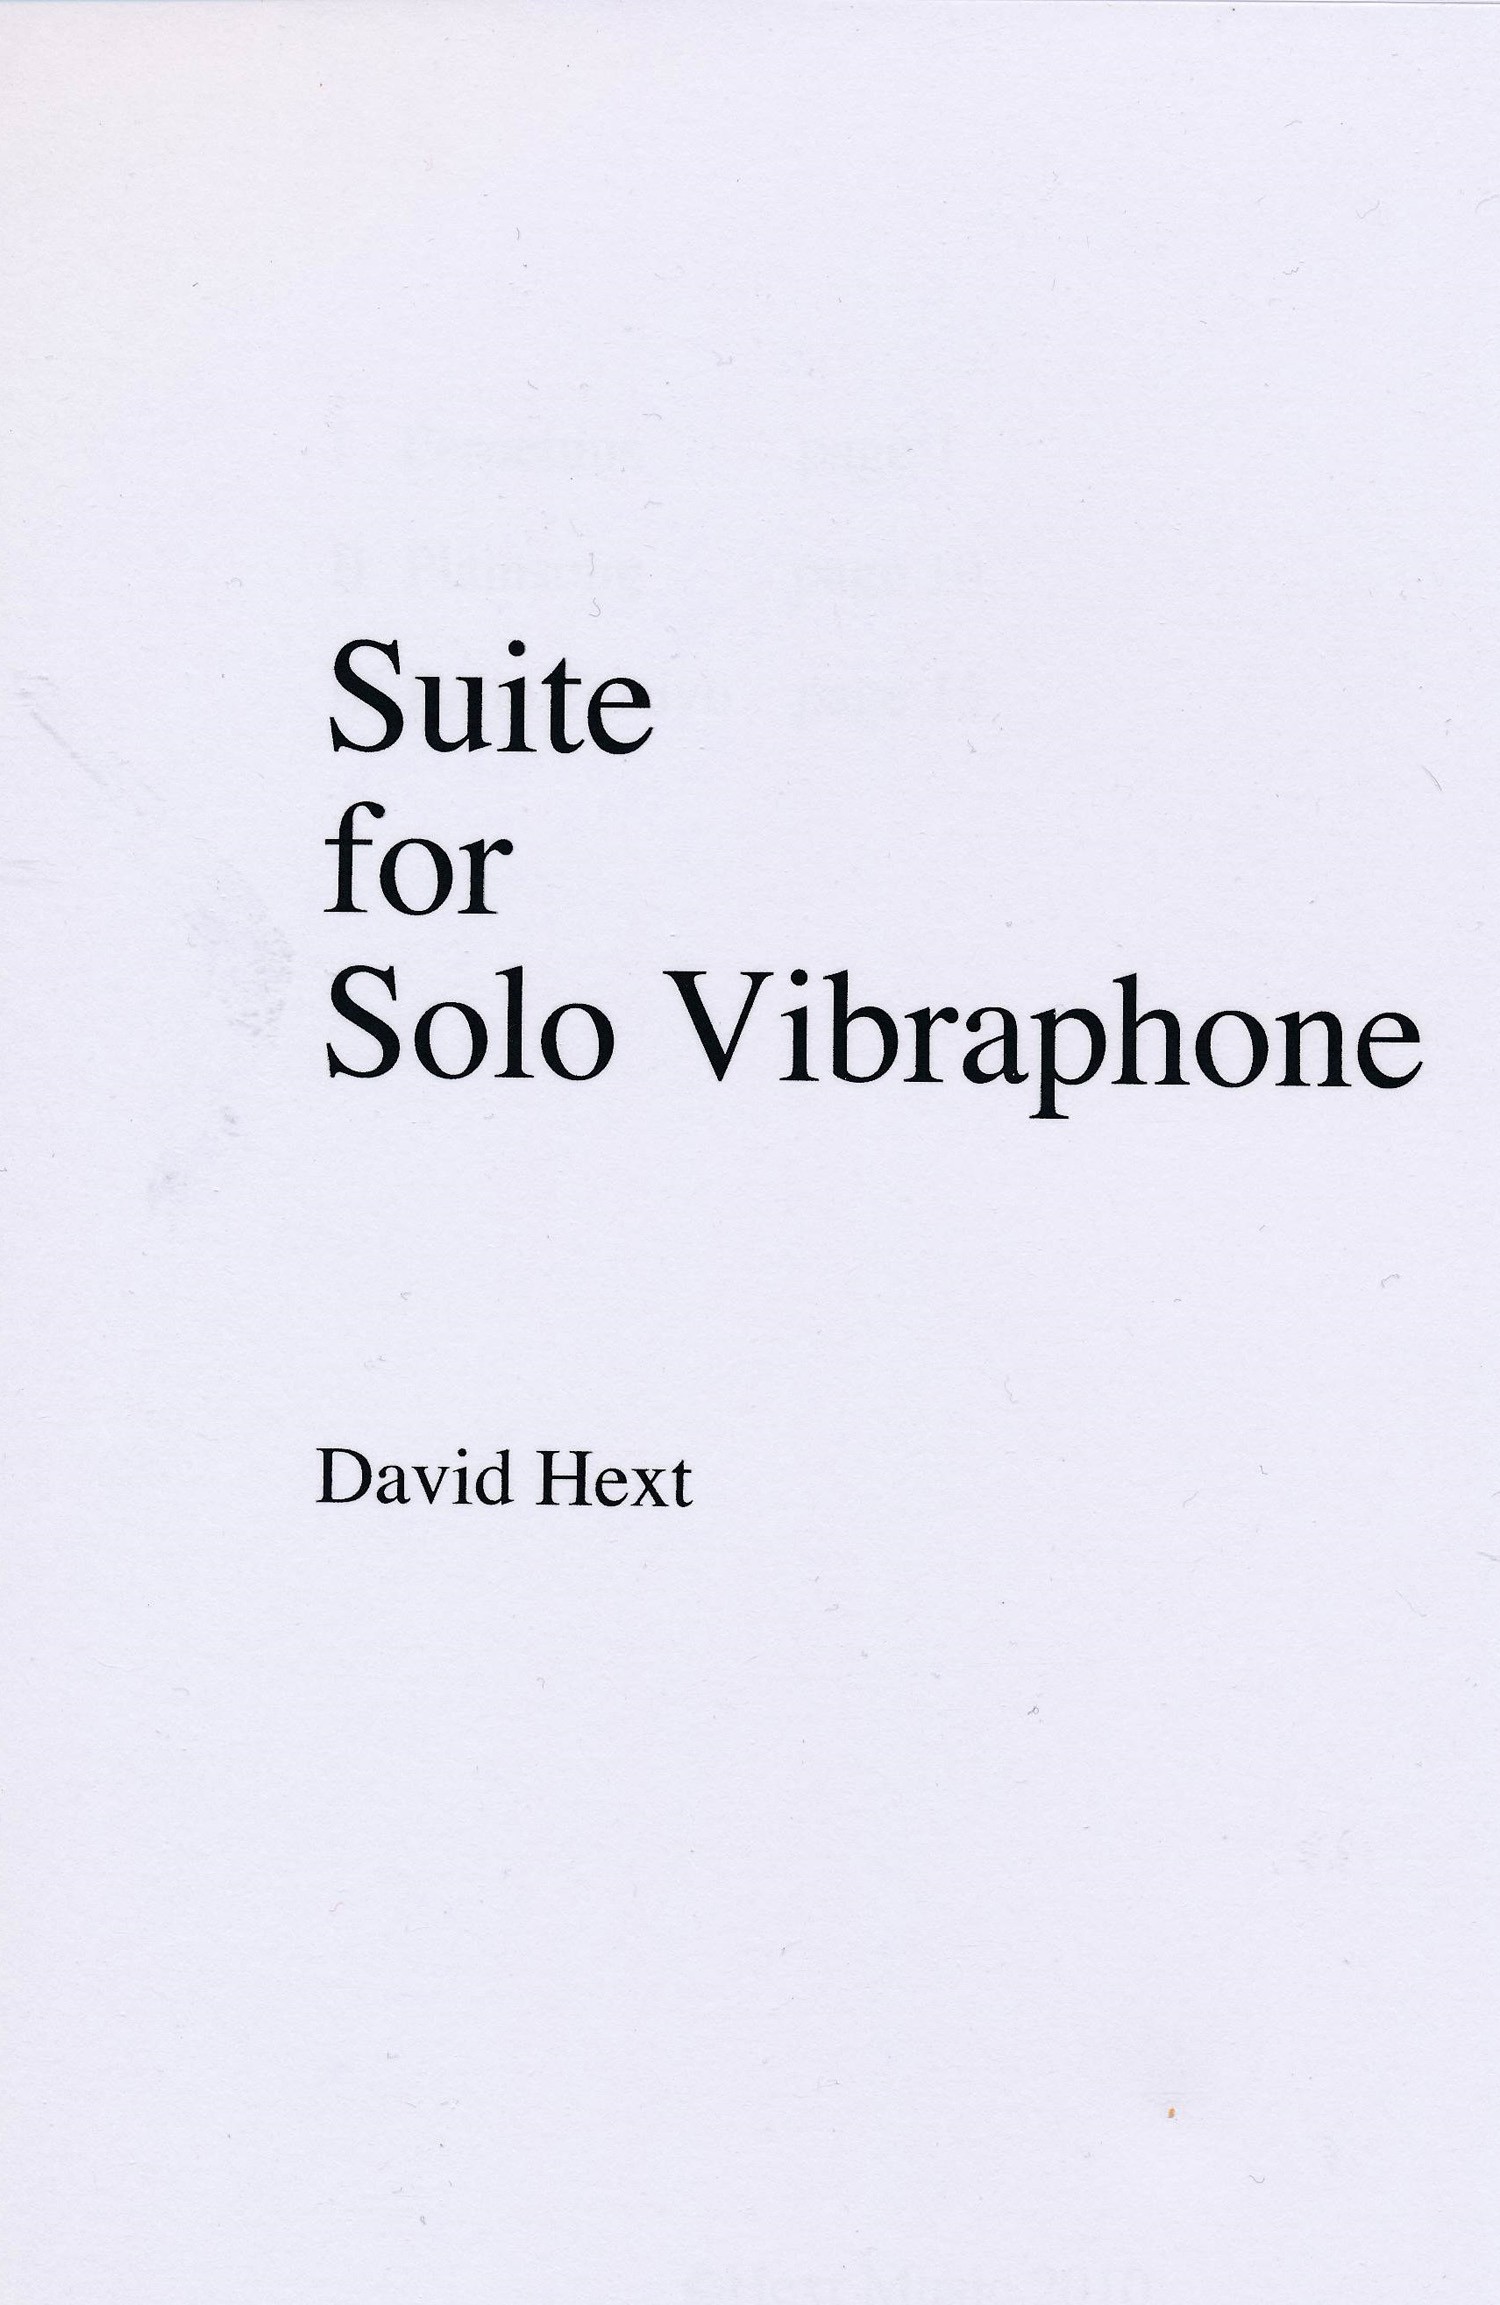 Suite for Solo Vibraphone by David Hext